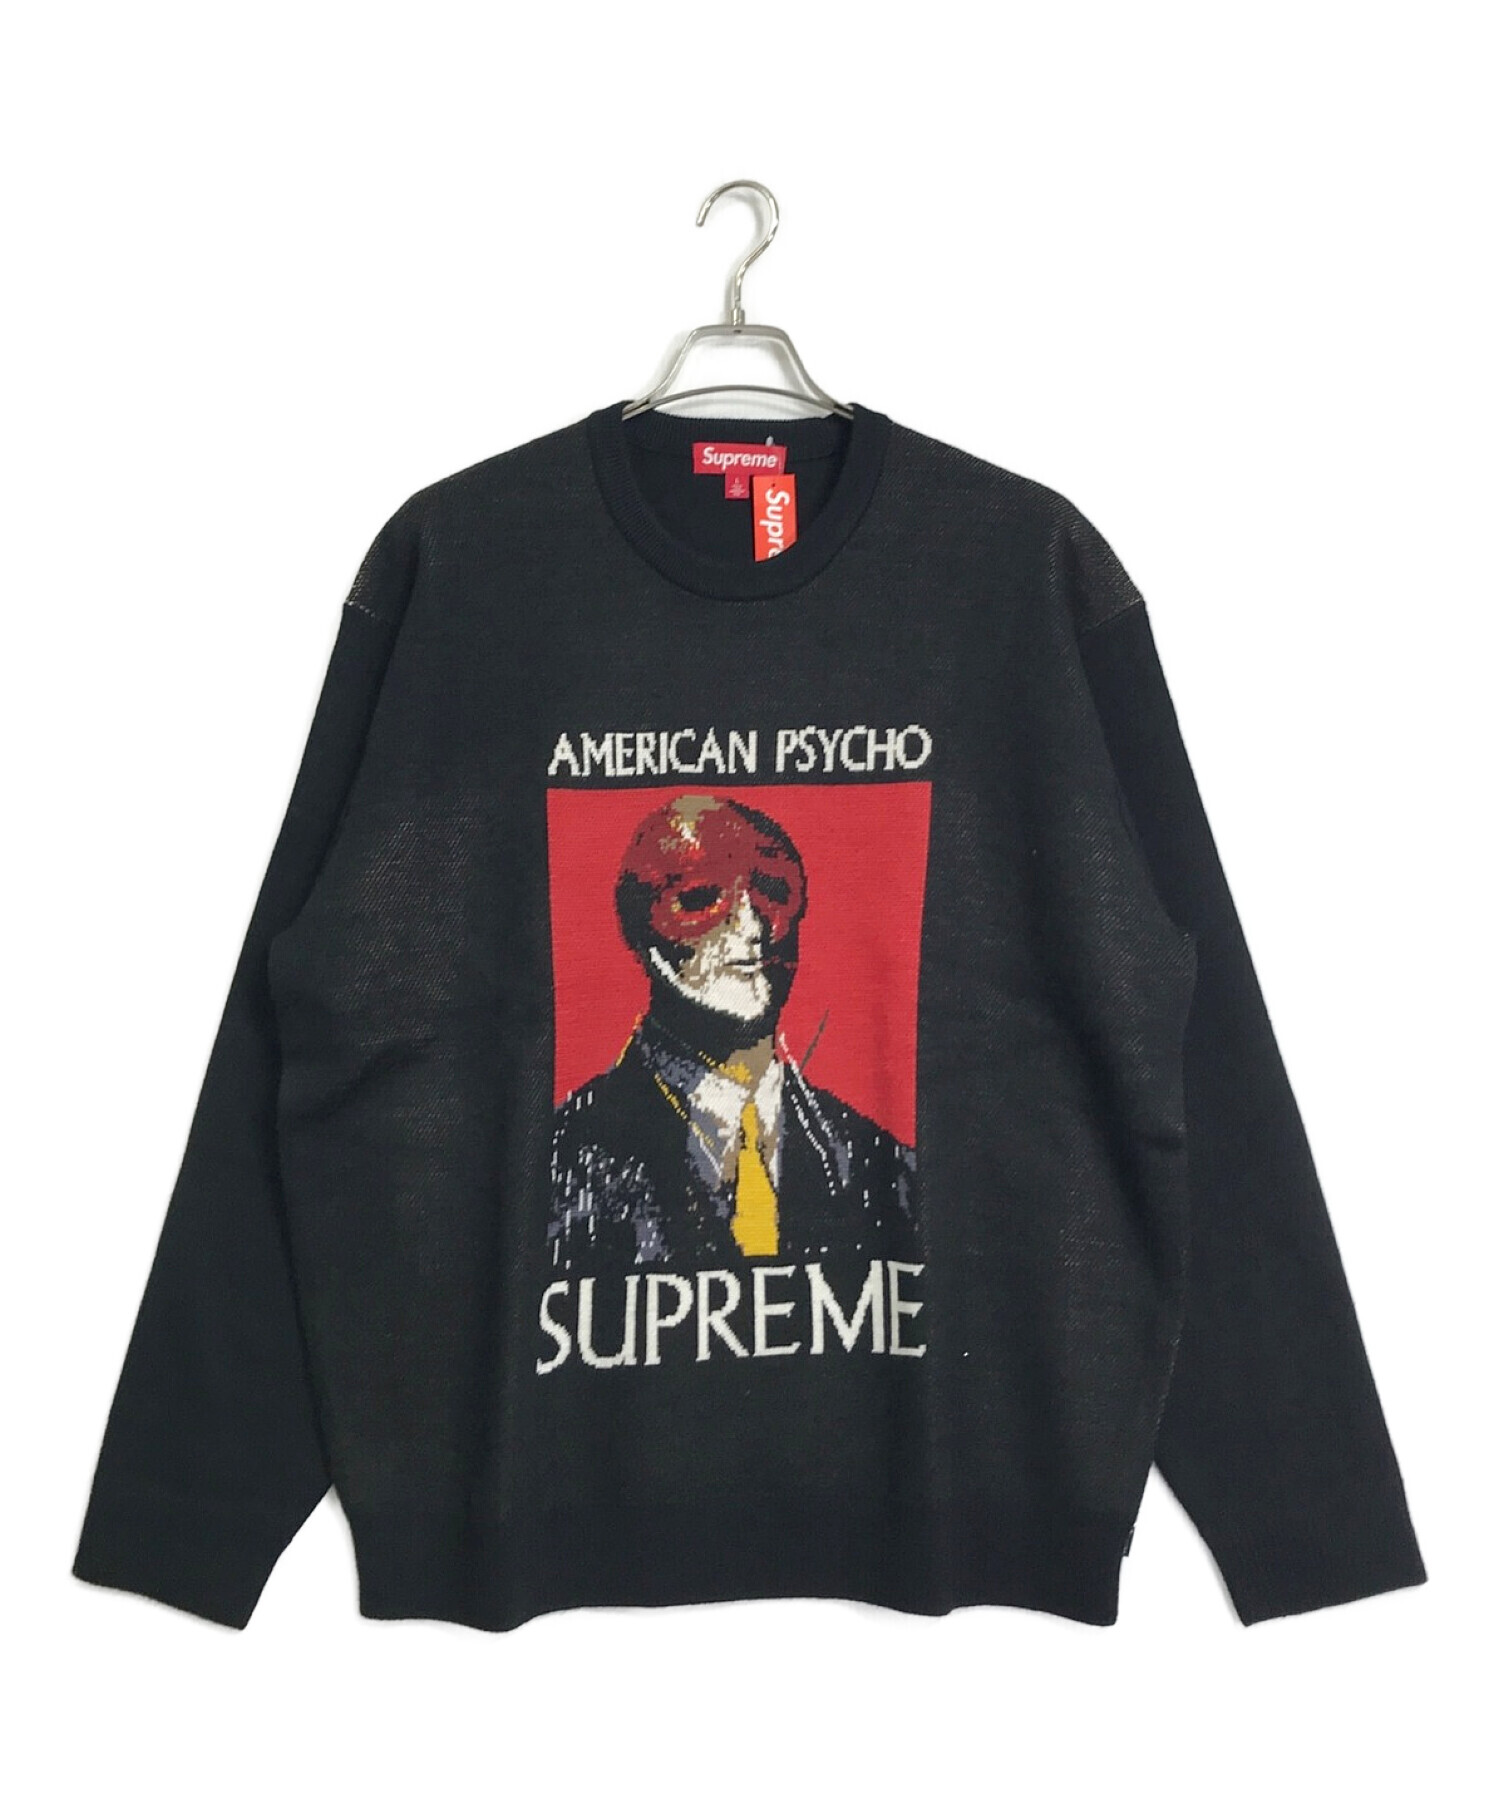 Supreme American Psycho Sweater / Lサイズ